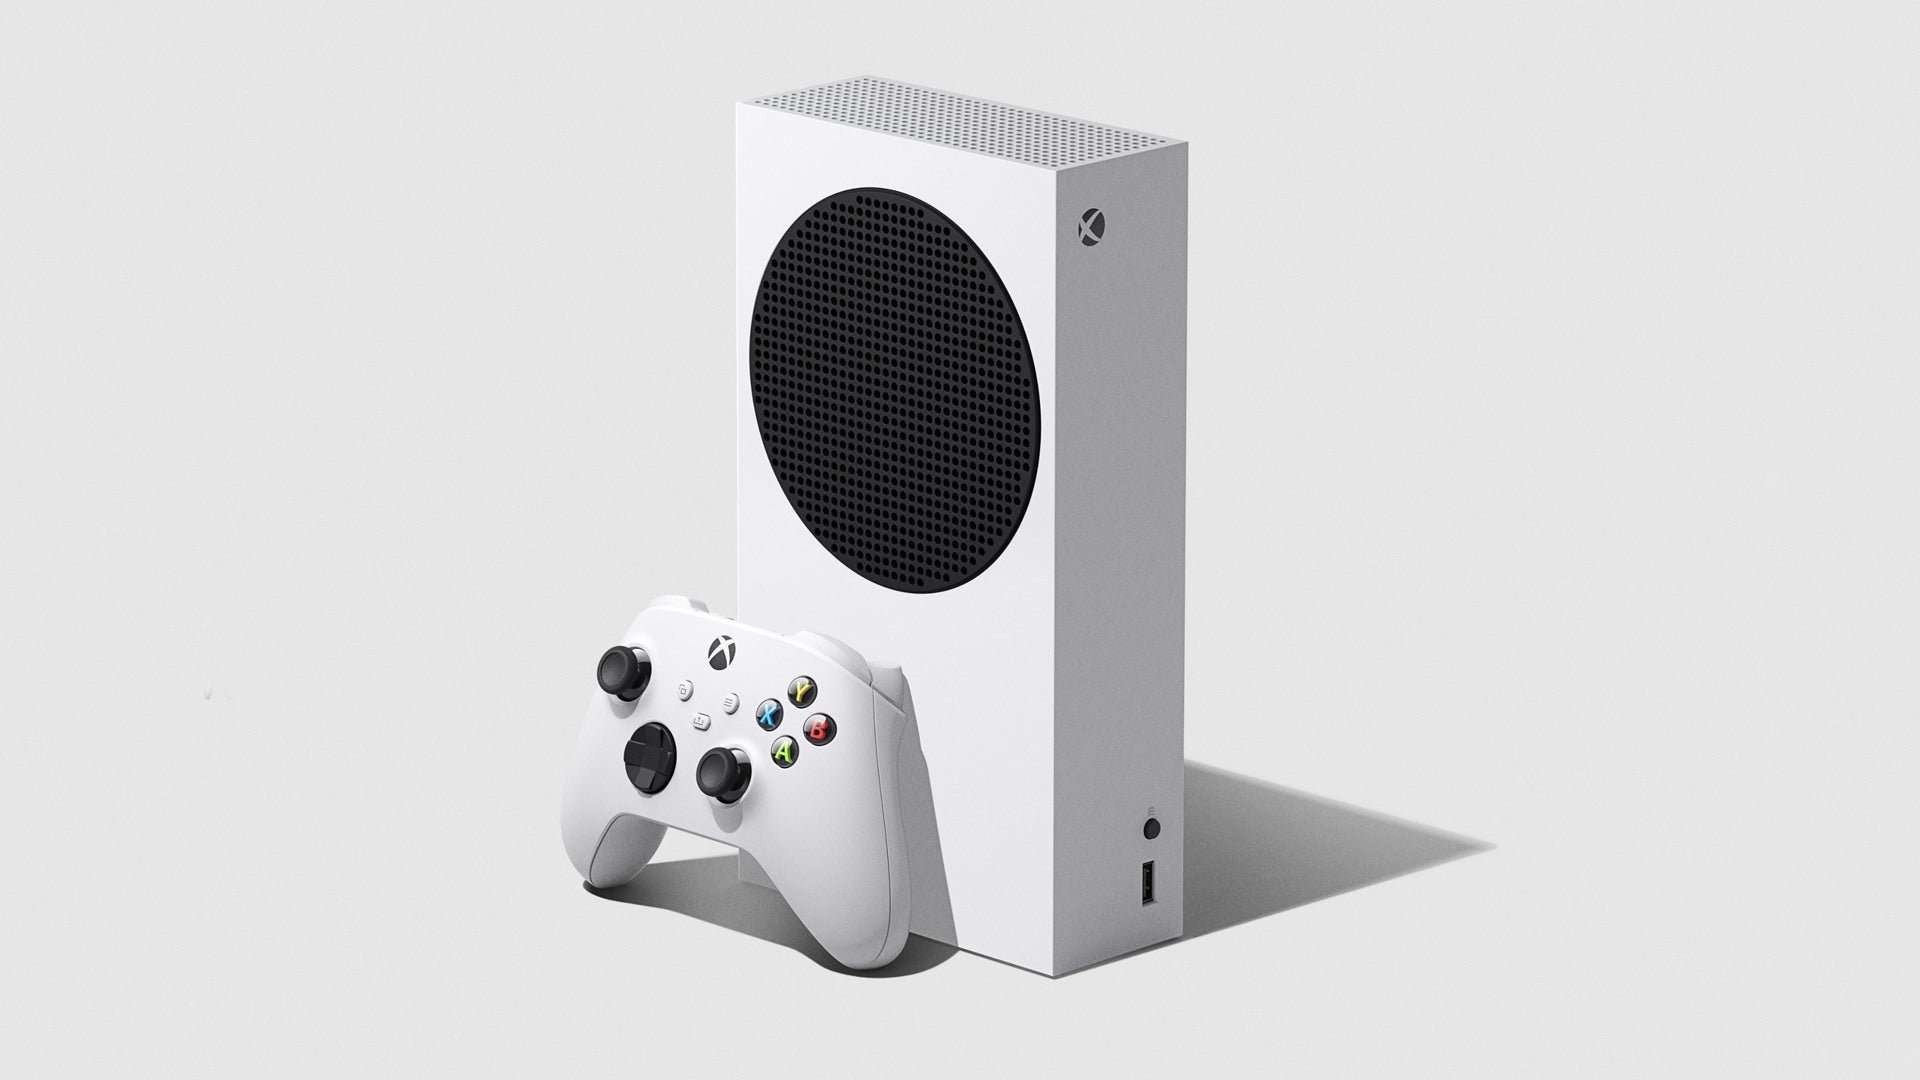 Xbox Series S IGN 7分：有局限、推荐作为第二主机